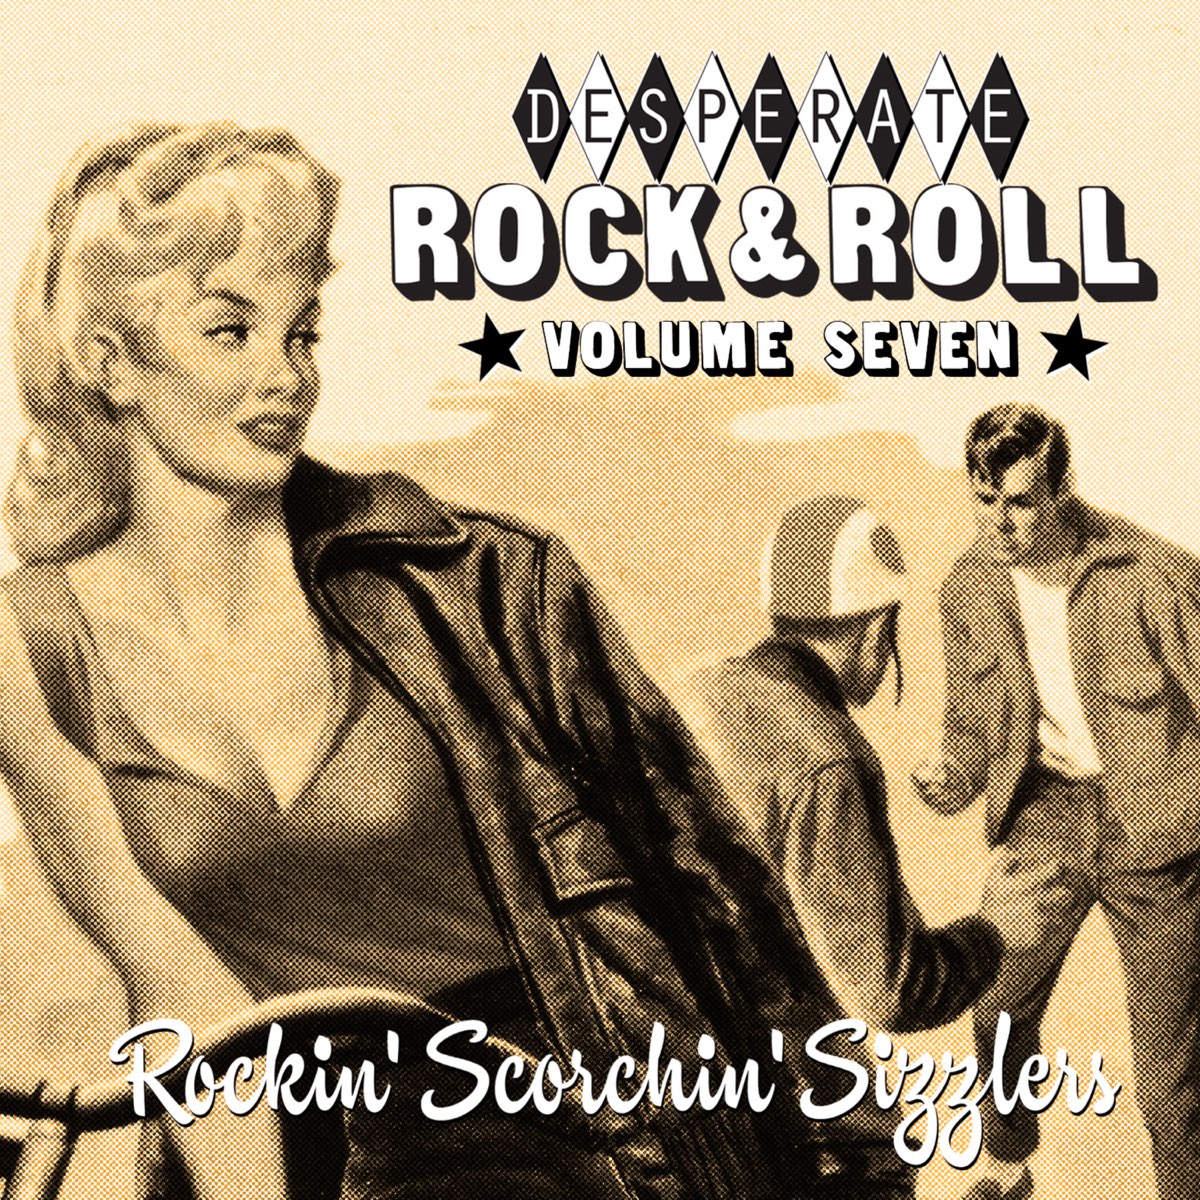 ‎various Artistsの「desperate Rocknroll Vol 7 Rockin Scorchin 